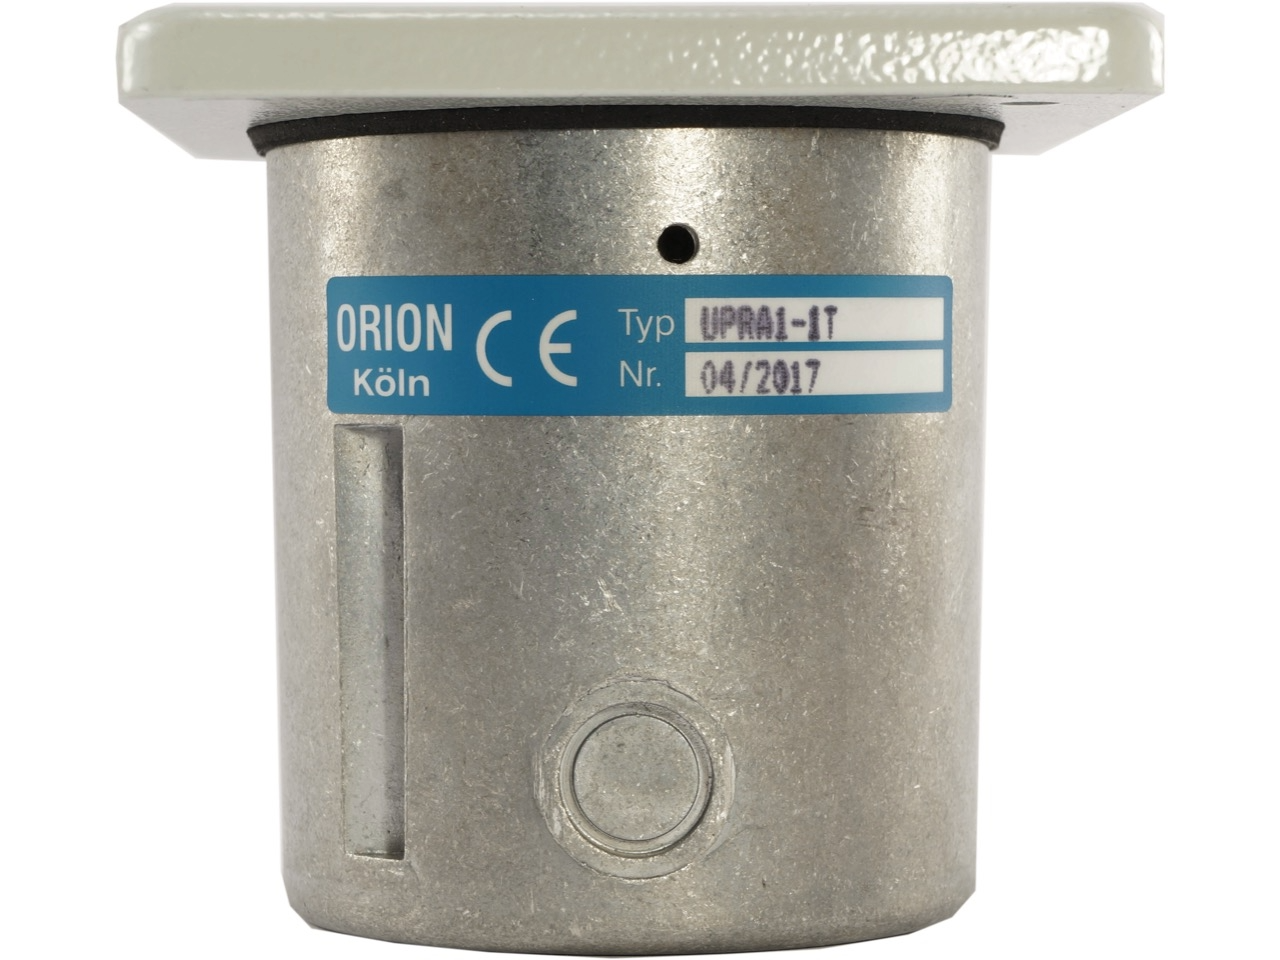 Orion UPRA 1-1 T Key-Switch Flush-Mount 1-direction